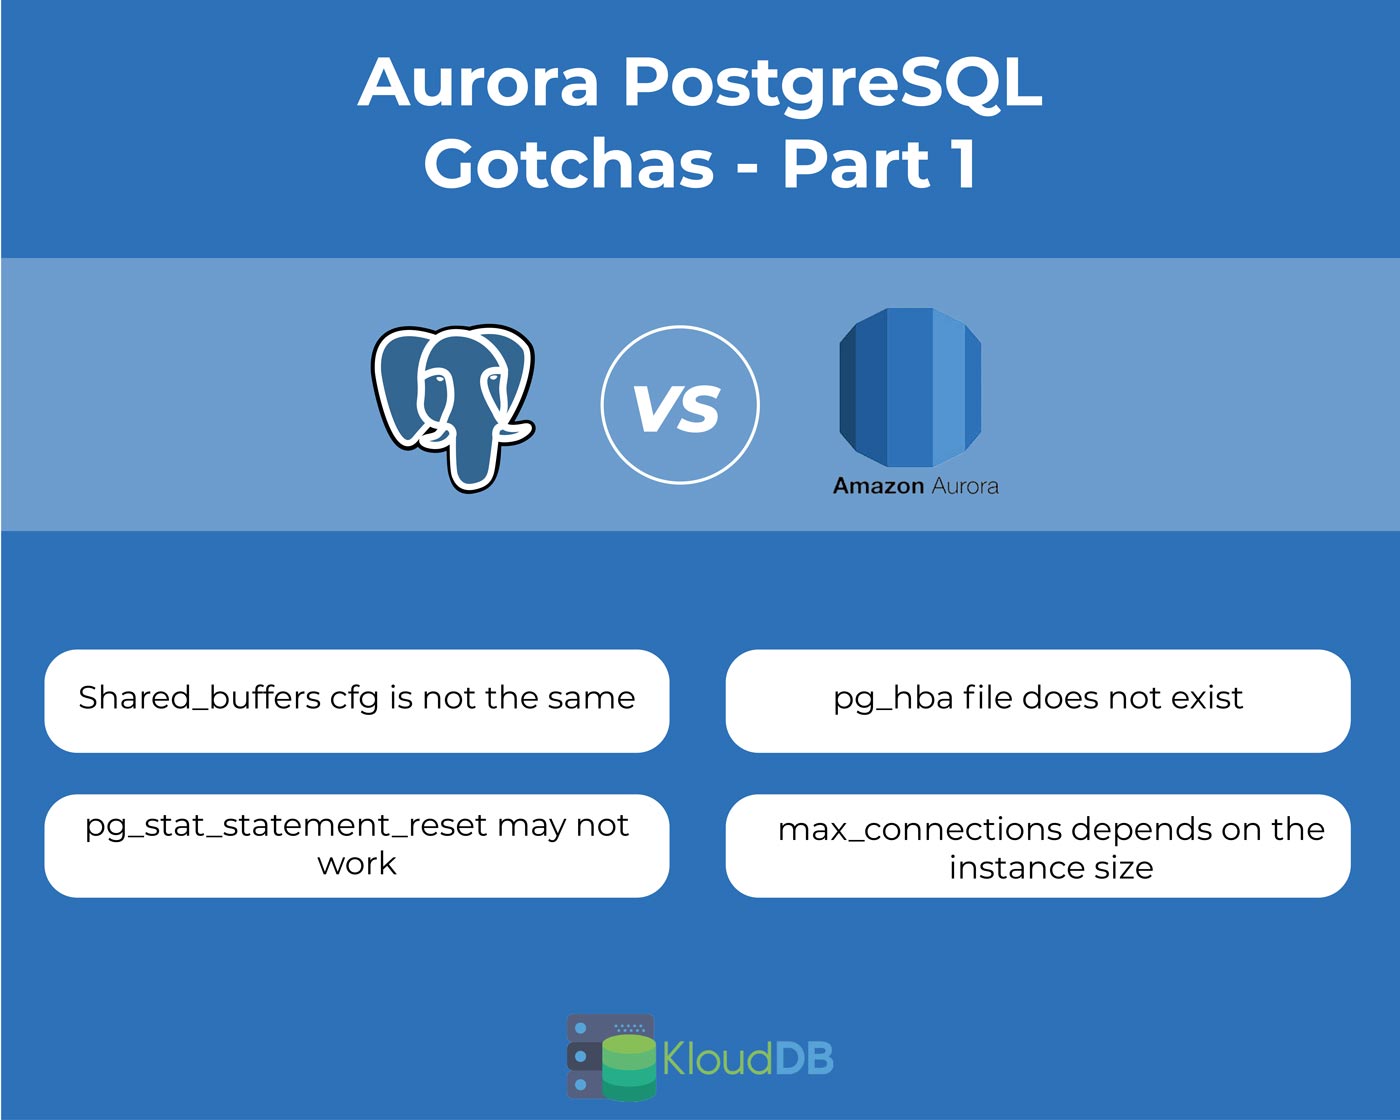 Aurora PostgreSQL Gotchas - Part 1